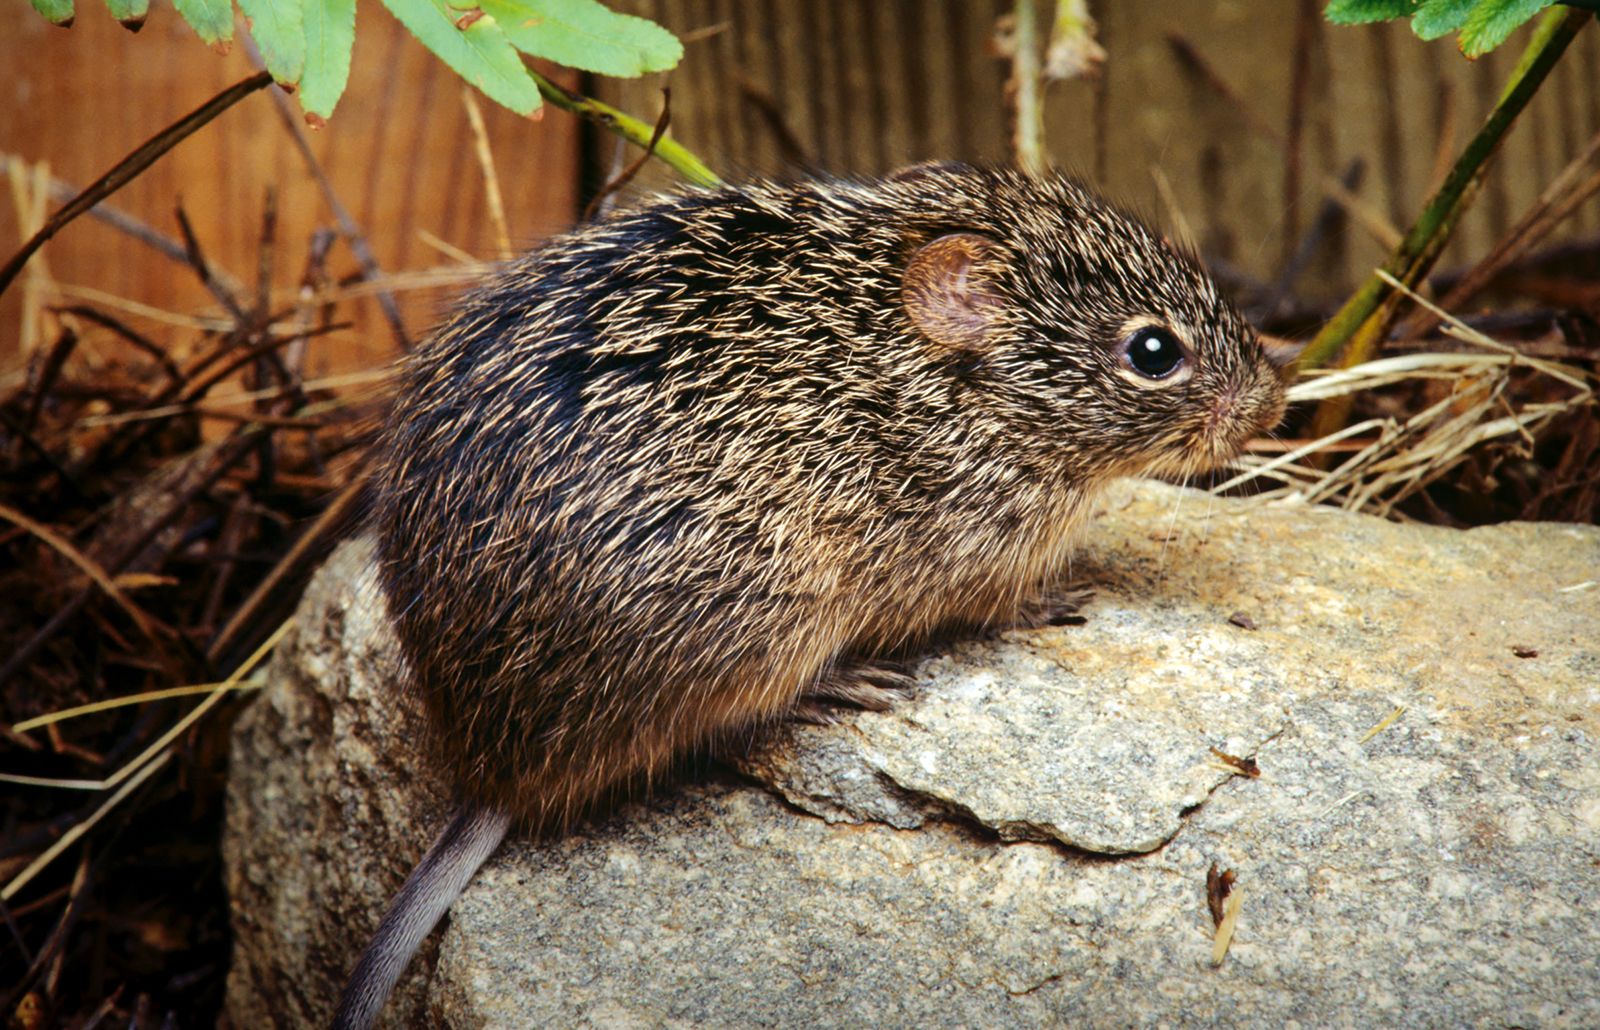 American spiny rat | Adaptations, Habitat & Diet | Britannica